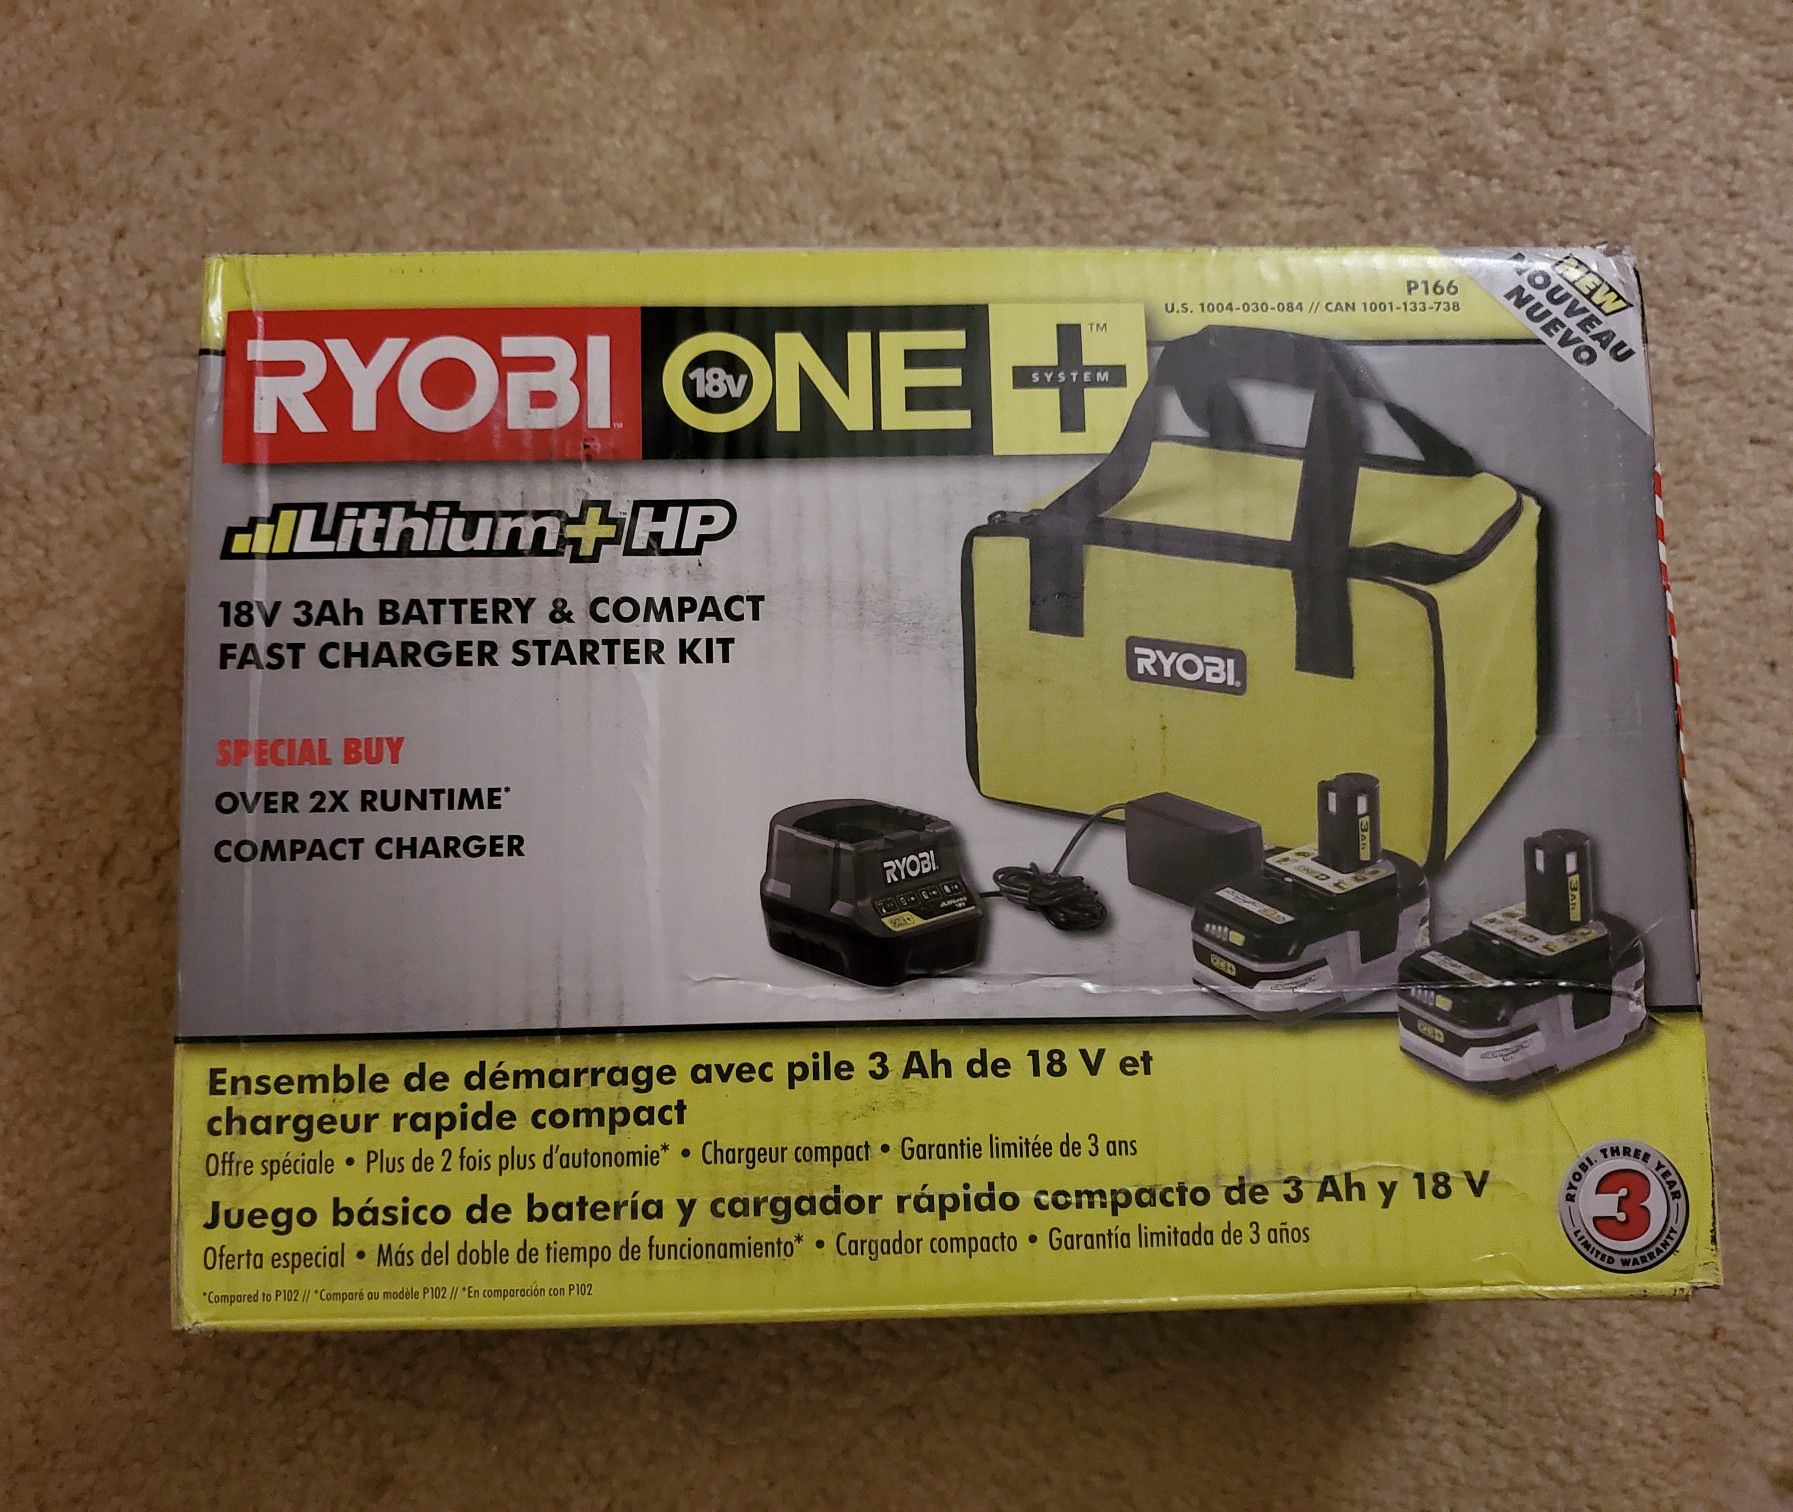 Brand new - Ryobi 18v 3ah Lithium+ HP kit